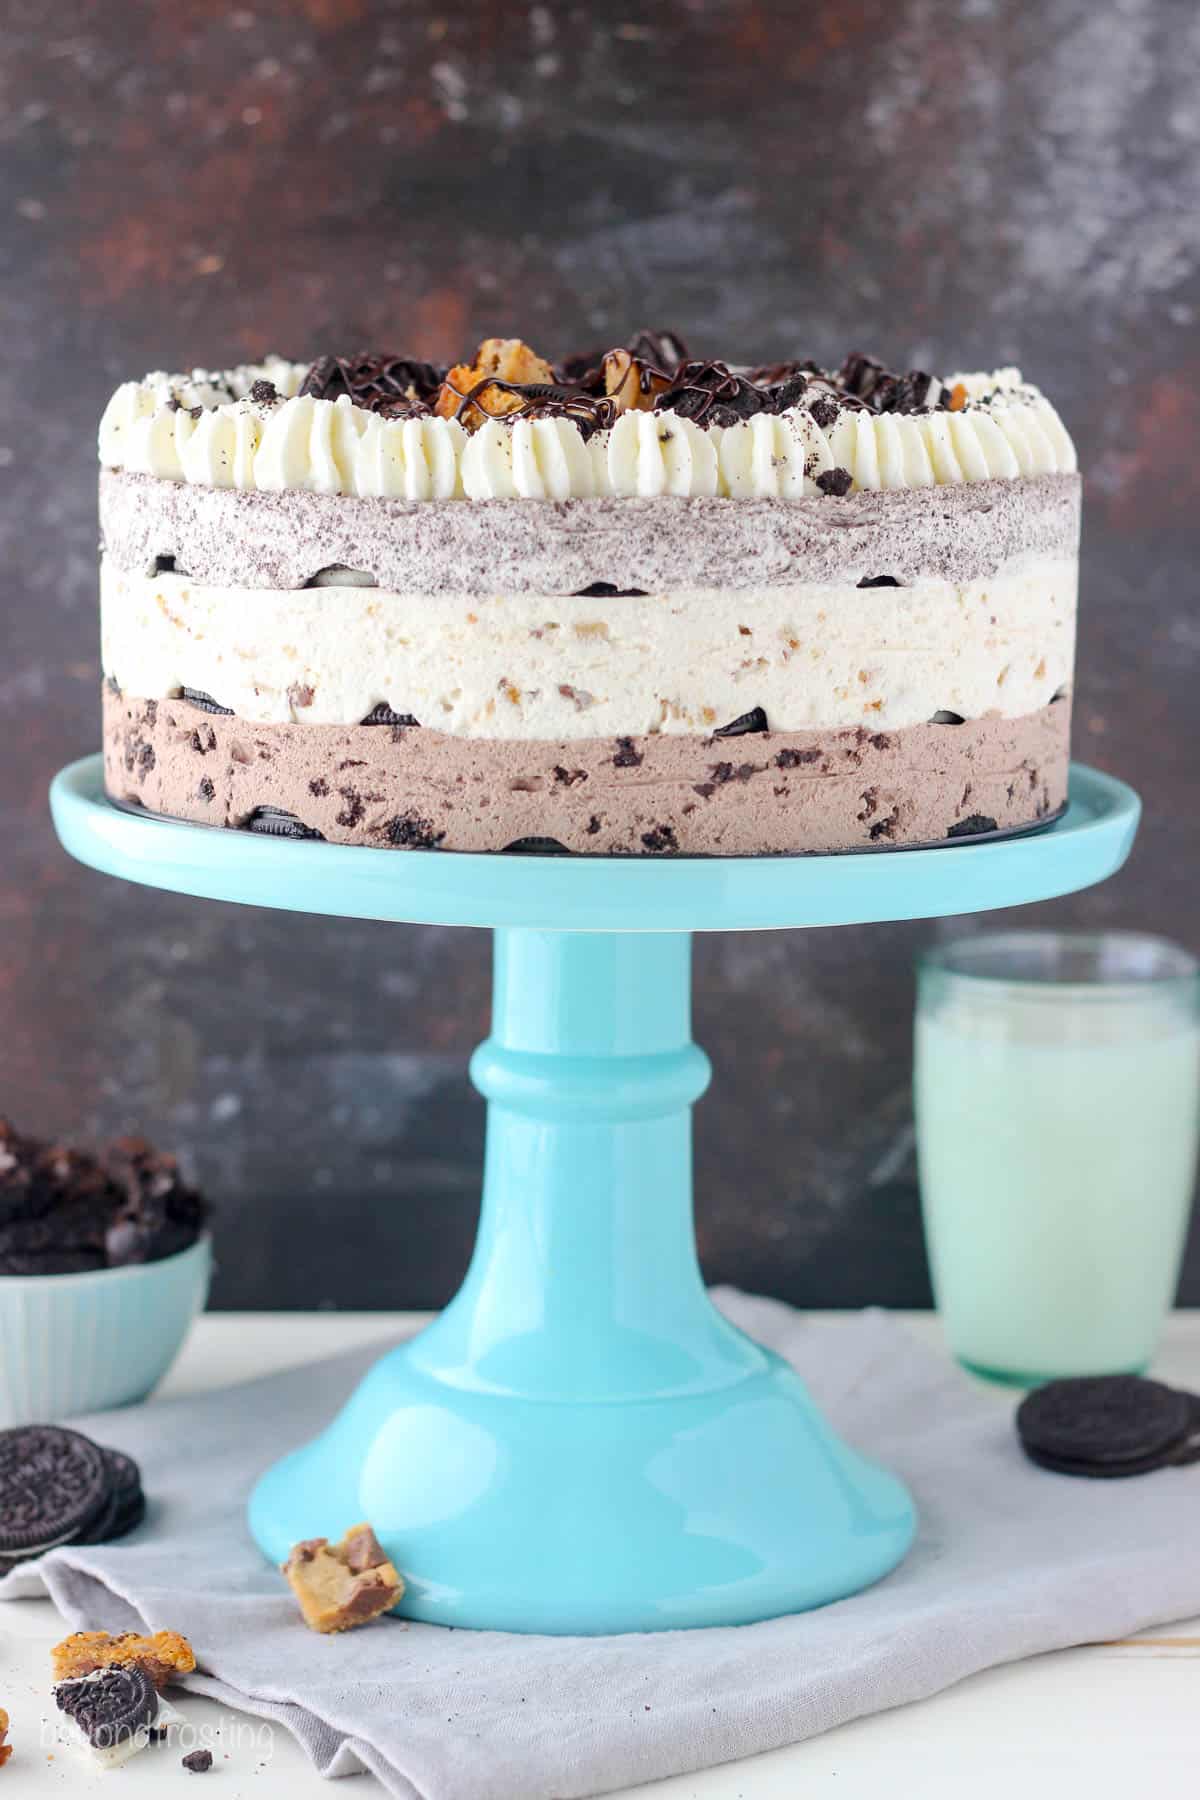 A slutty brownie icebox cake on a blue cake stand